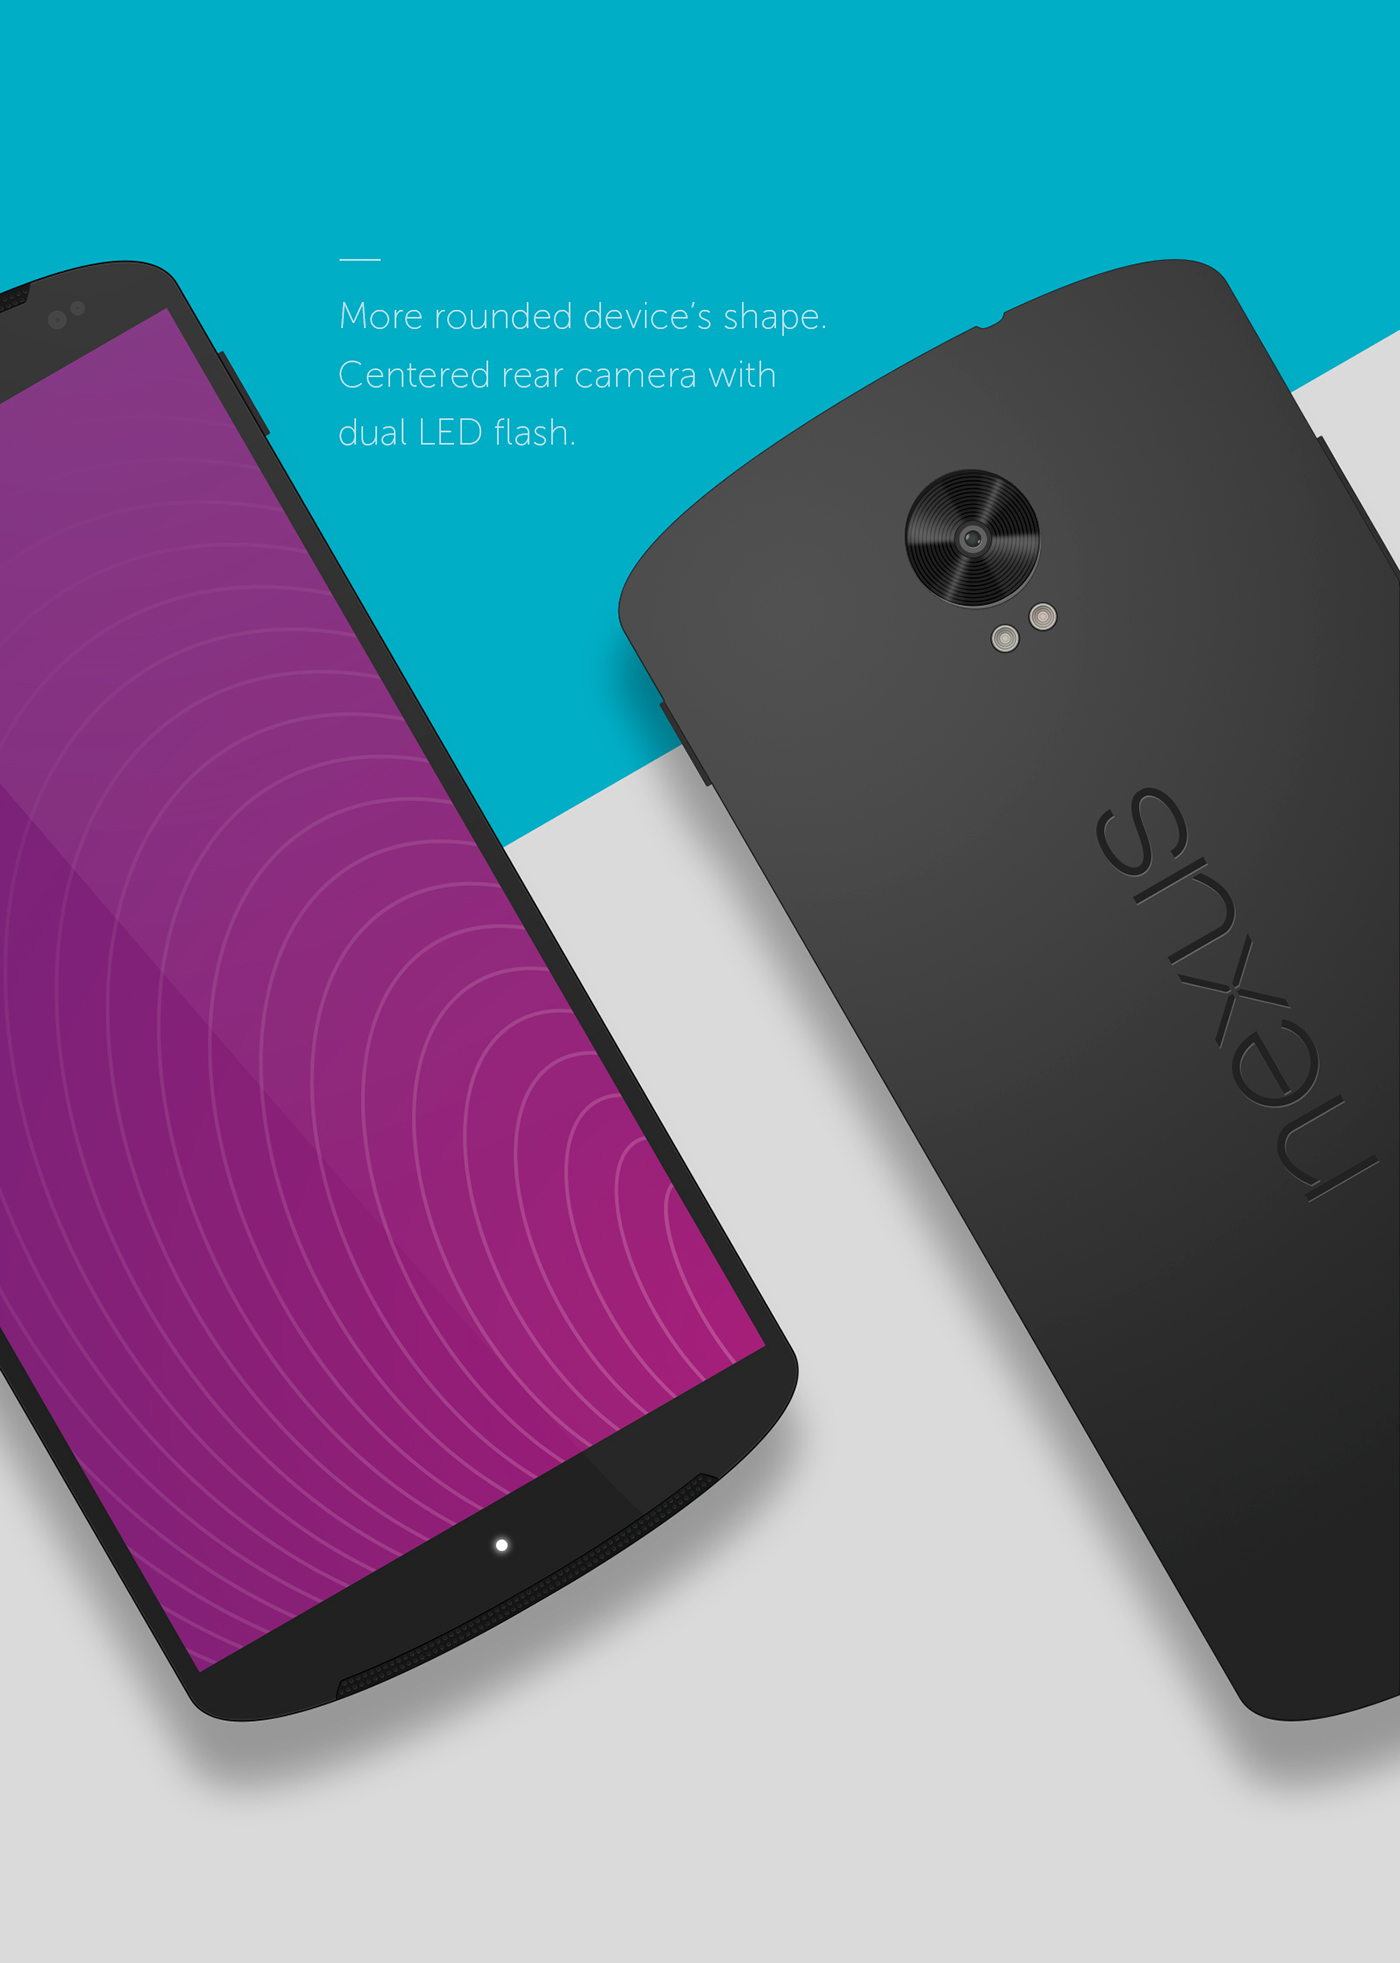 smartphone nexus concept redesign device Technology phone